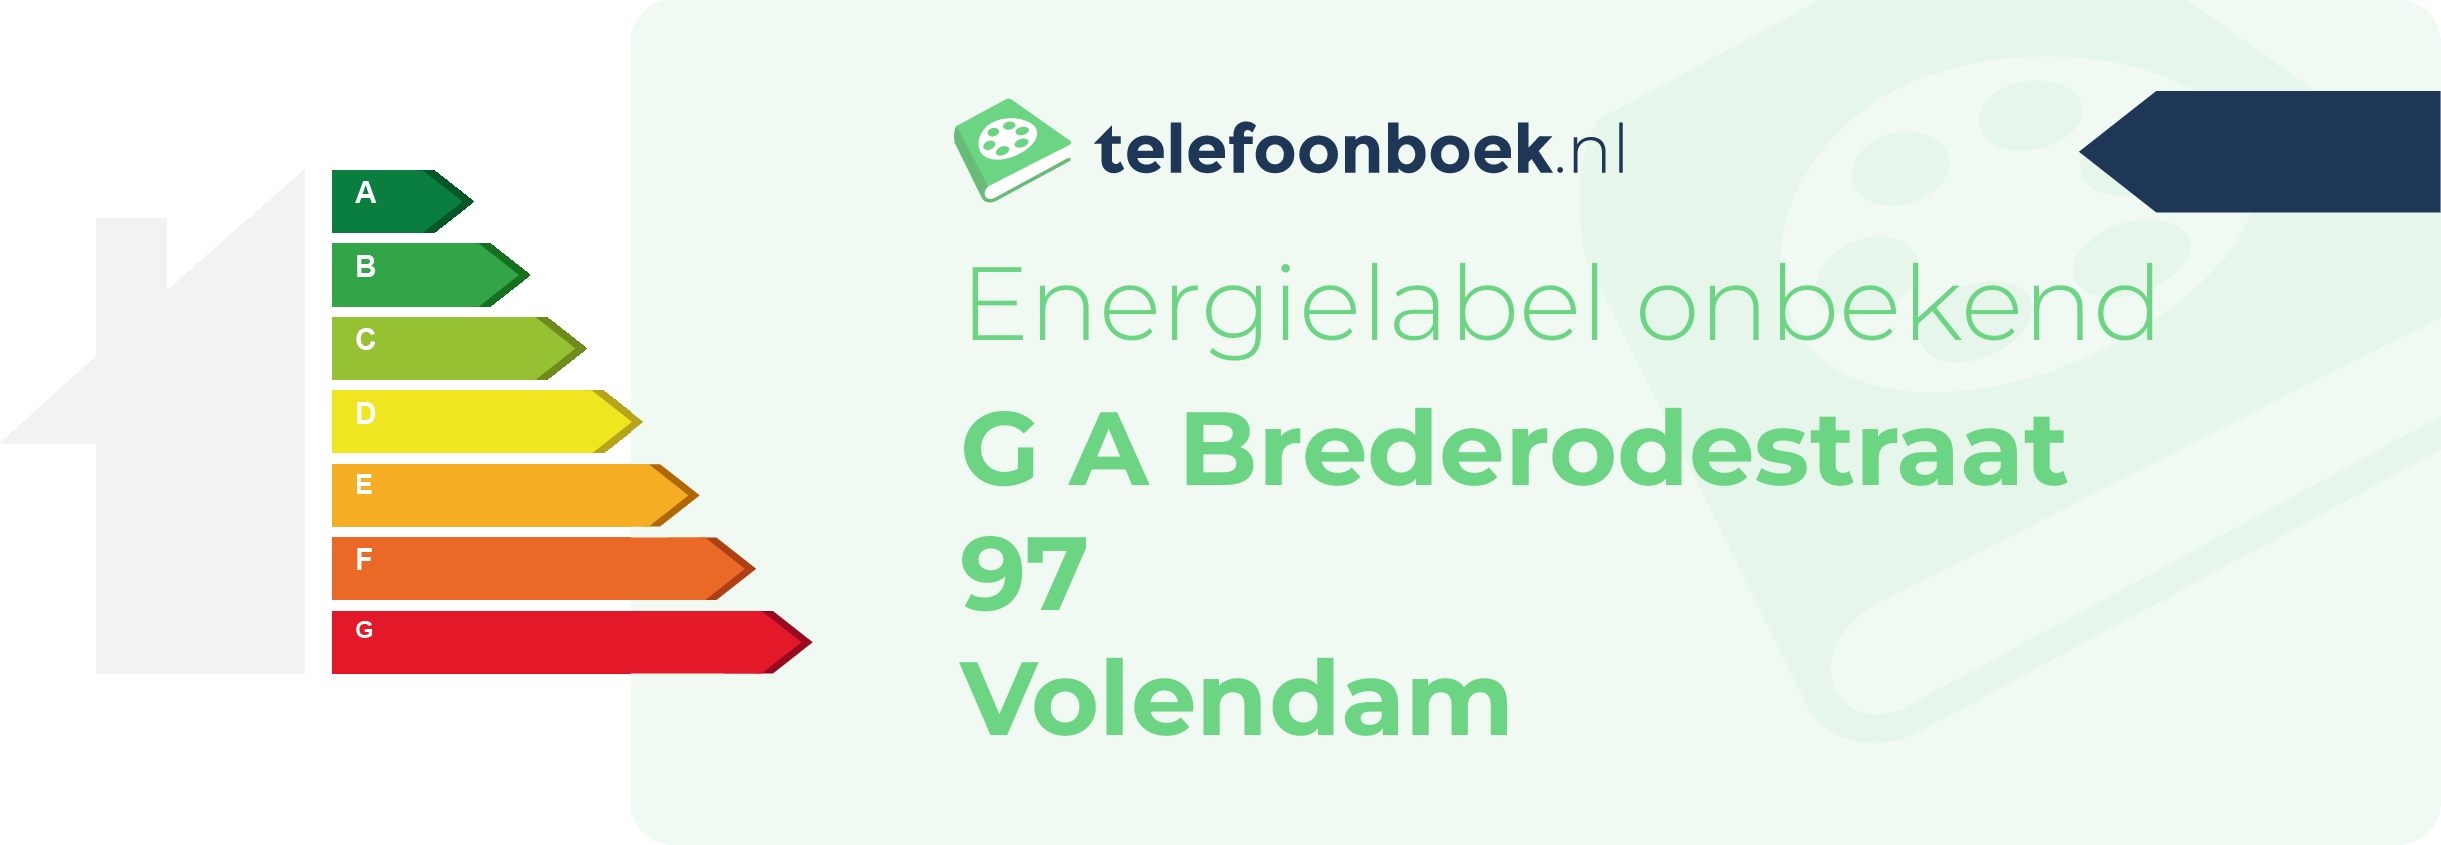 Energielabel G A Brederodestraat 97 Volendam